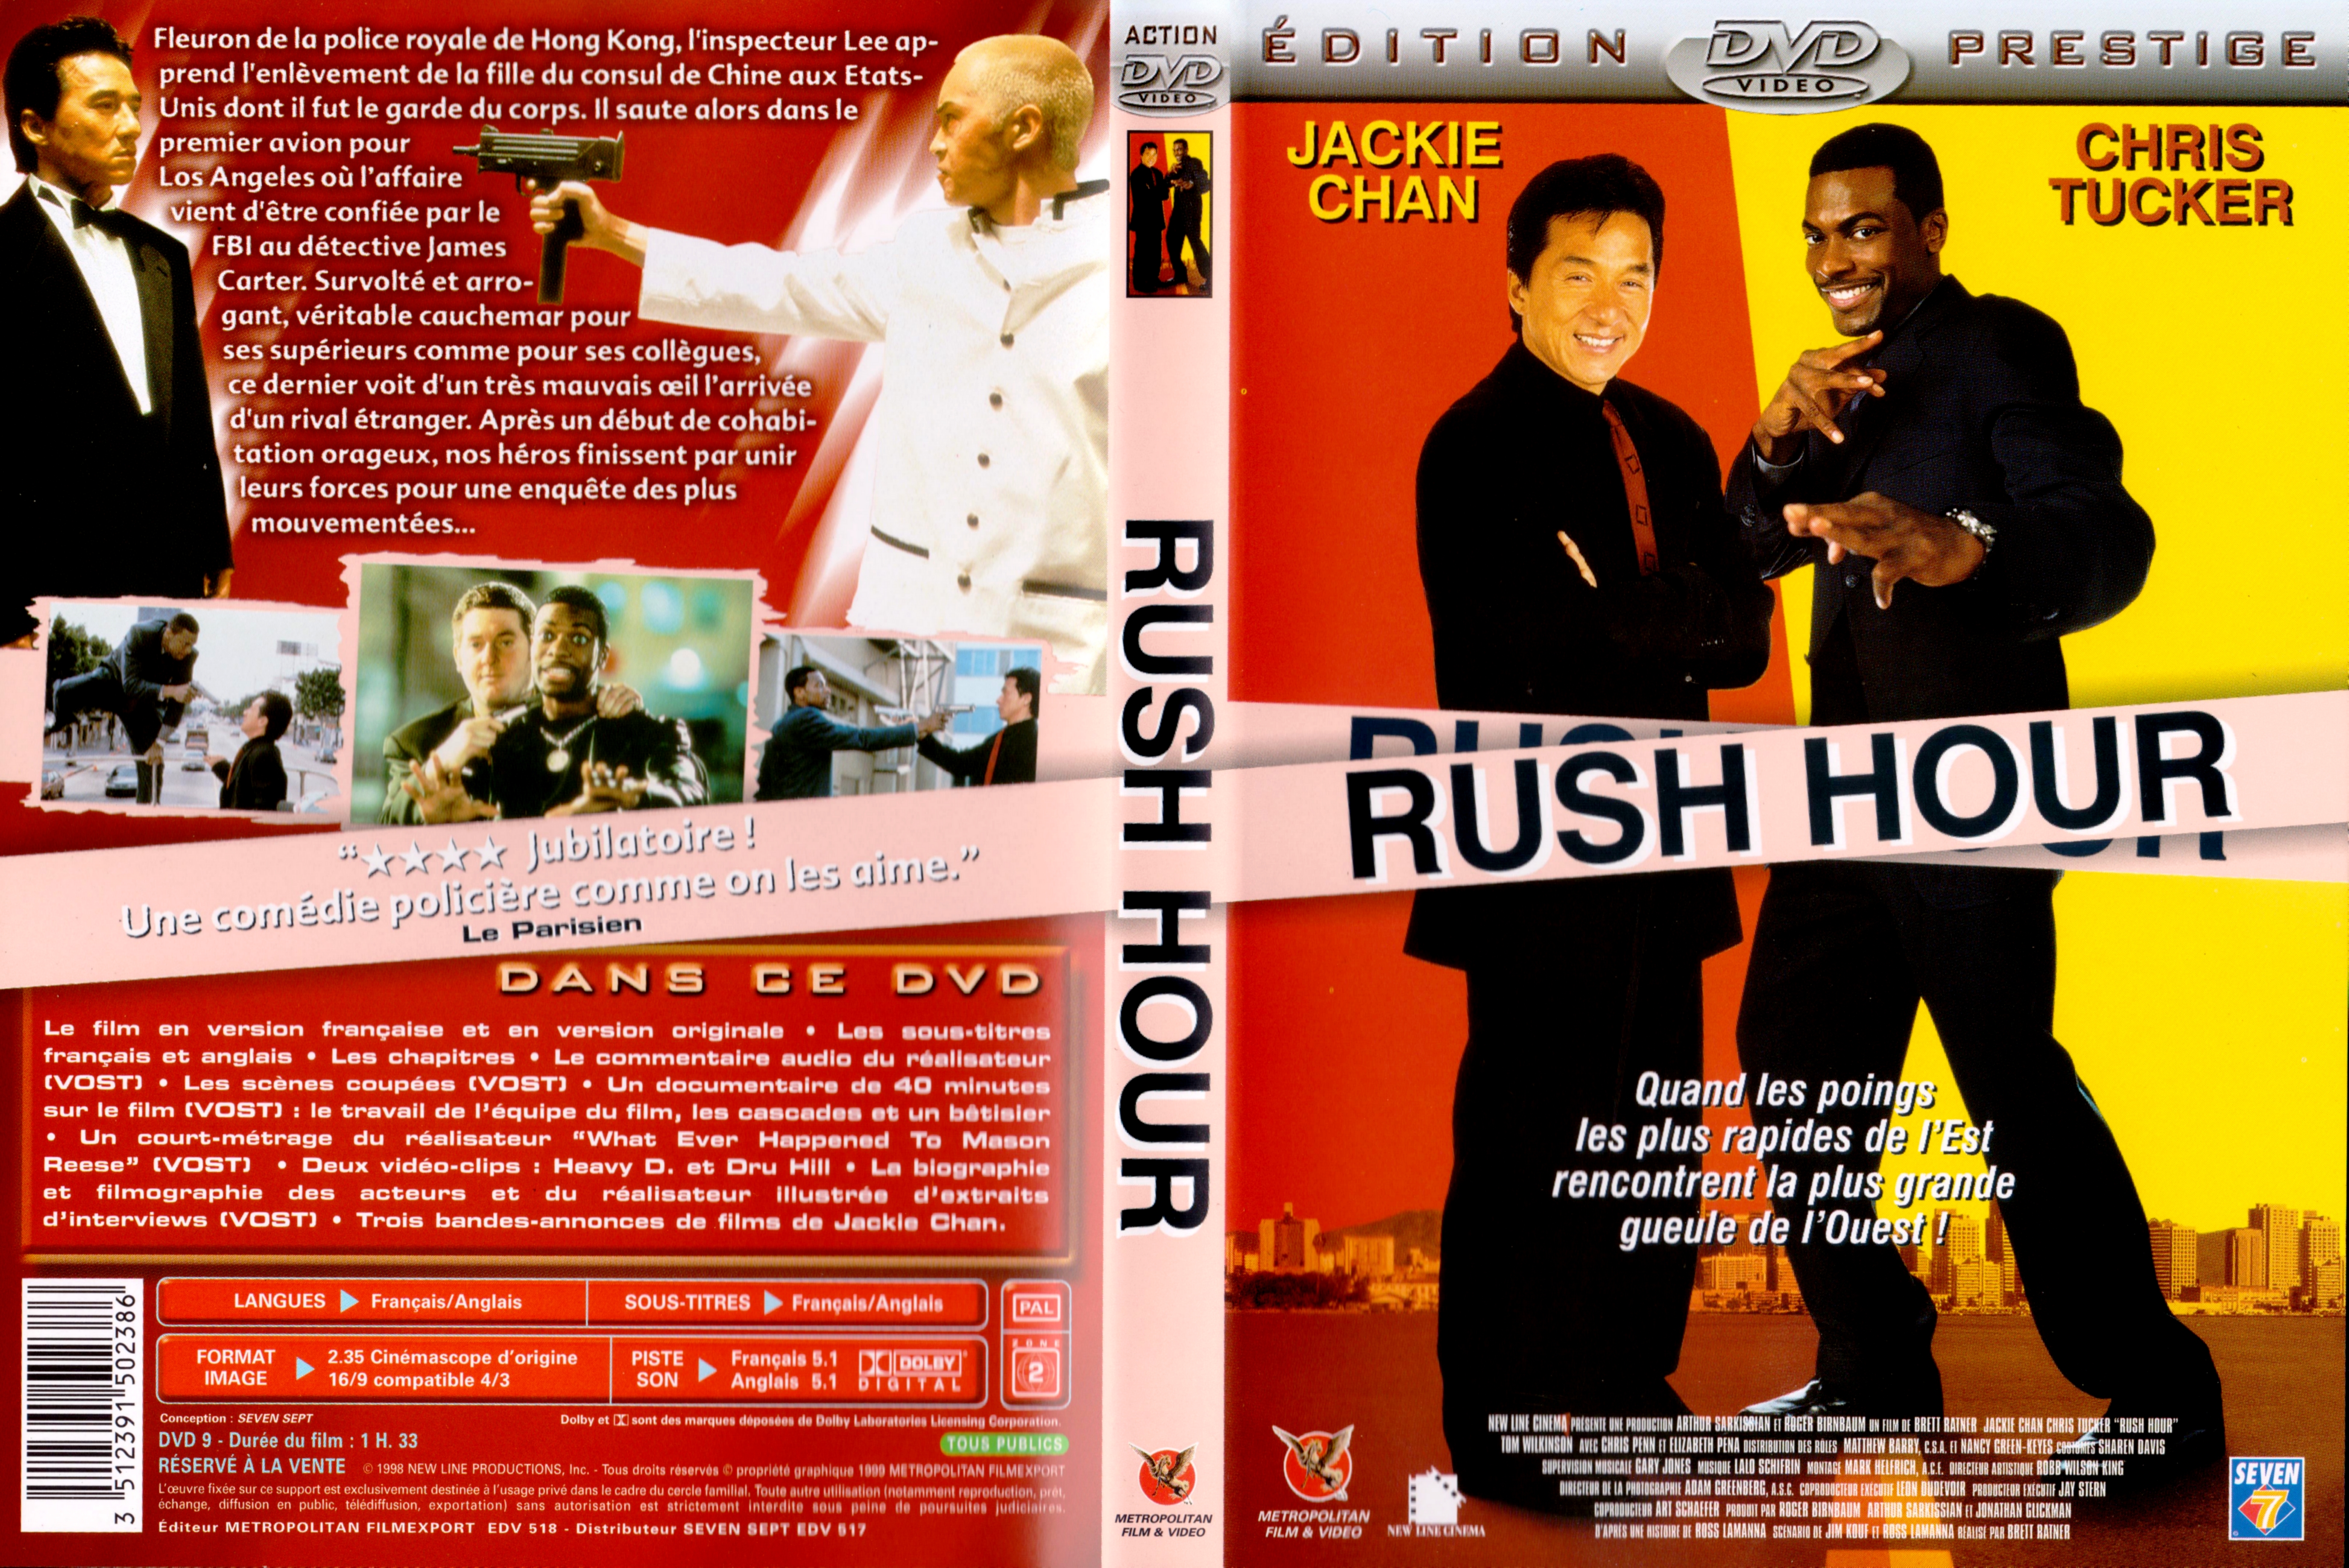 Jaquette DVD Rush hour v2